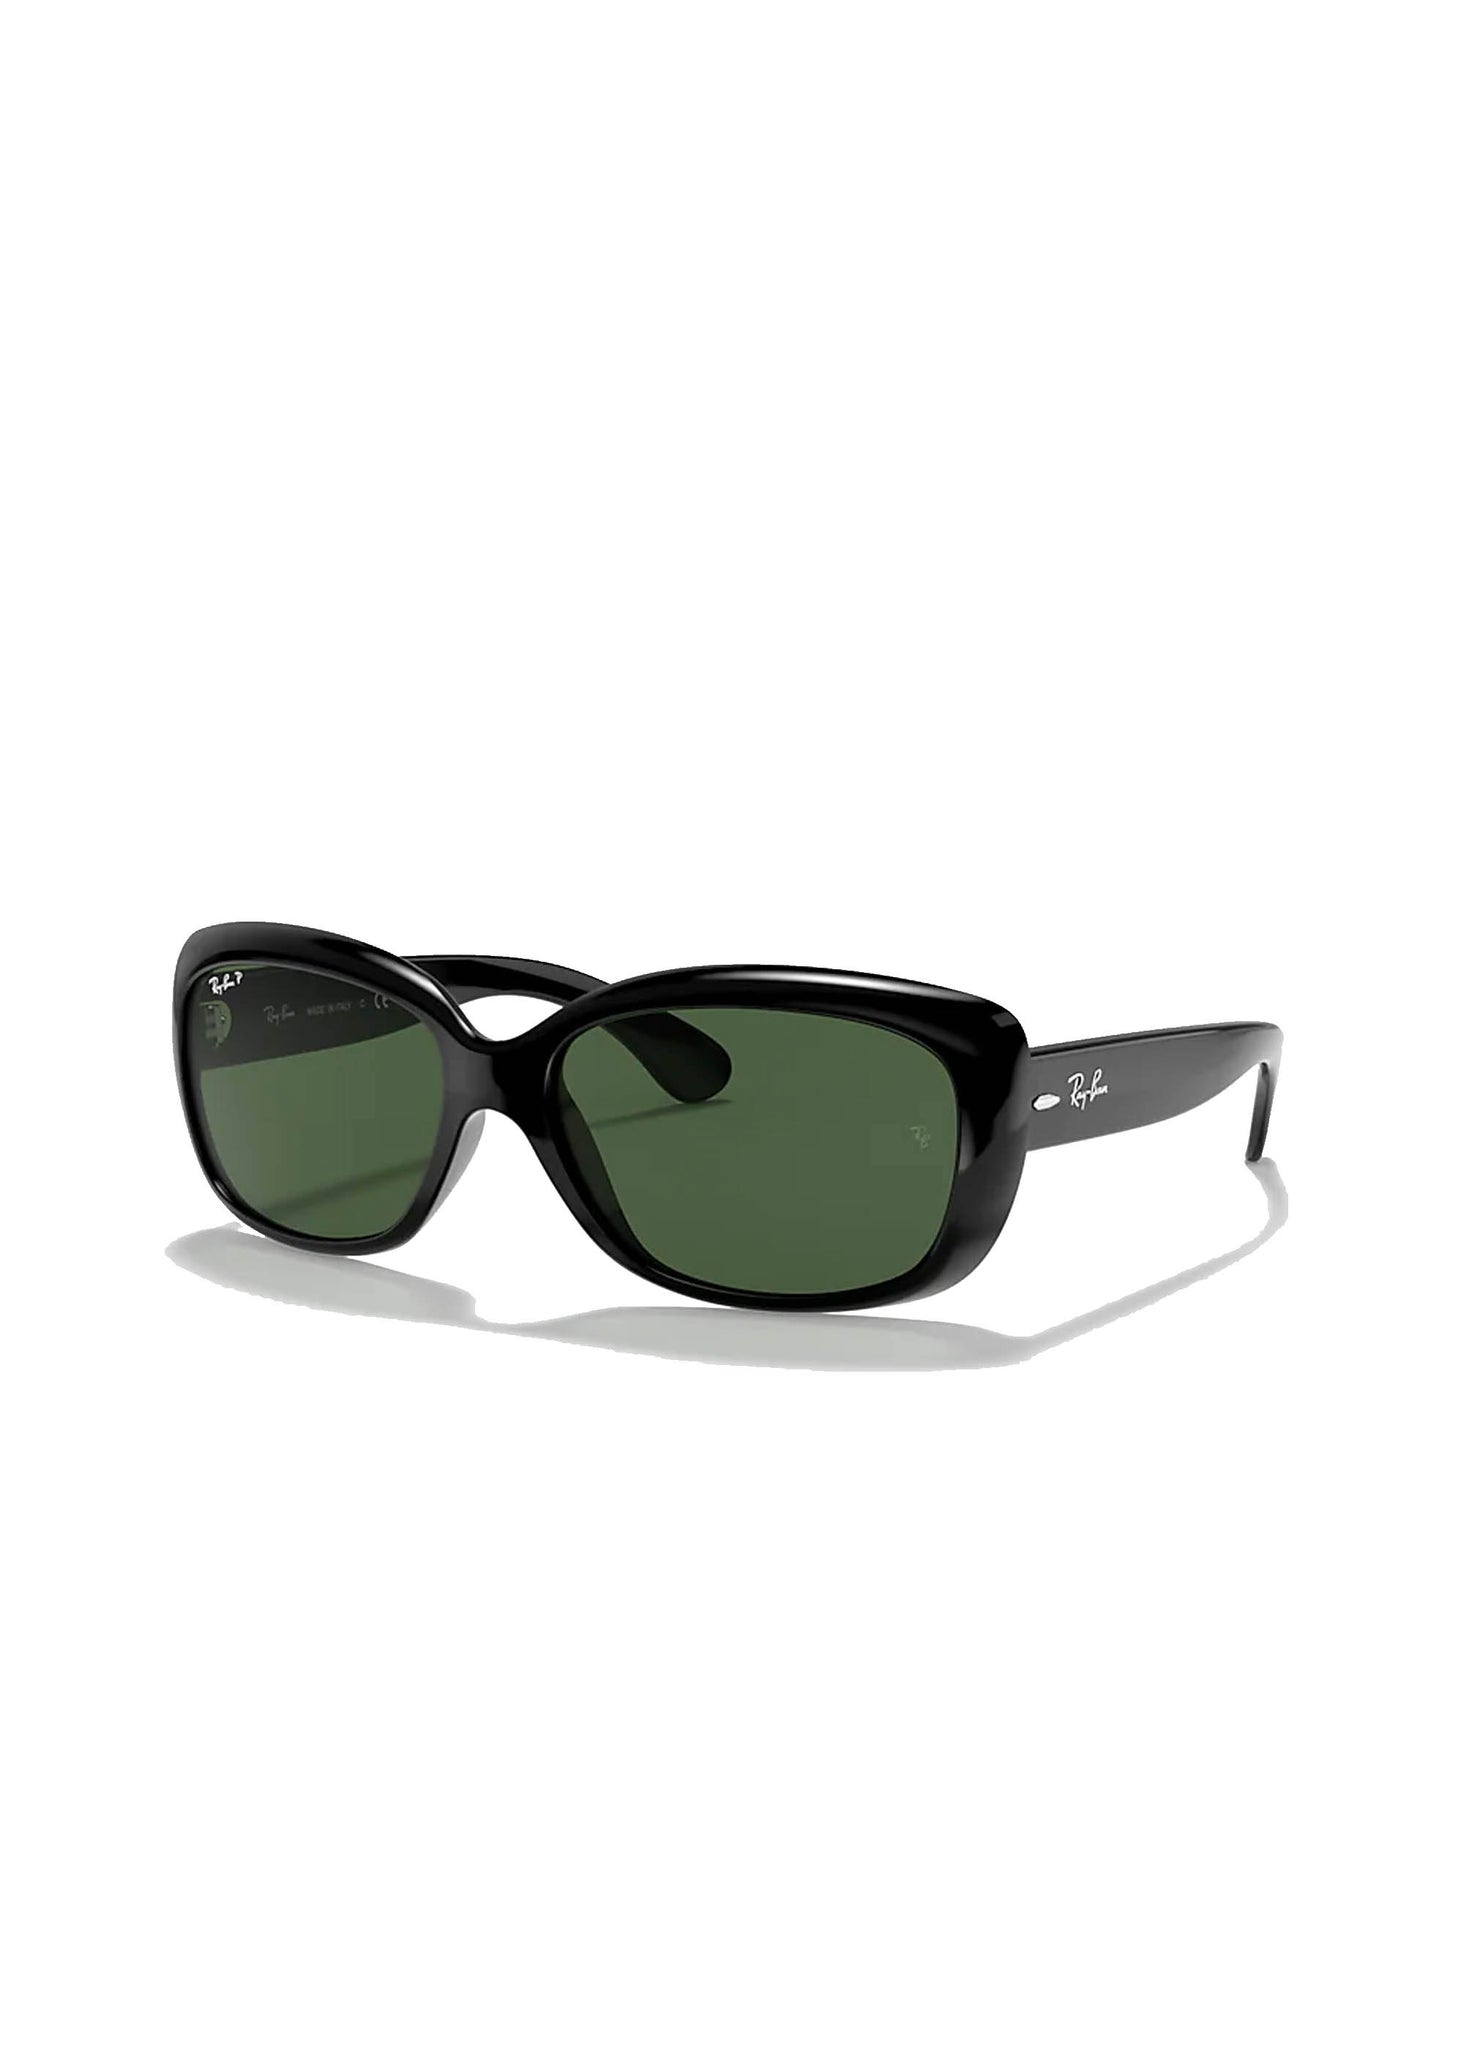 Raybans Bylon Woman Sunglasses - Dark Green